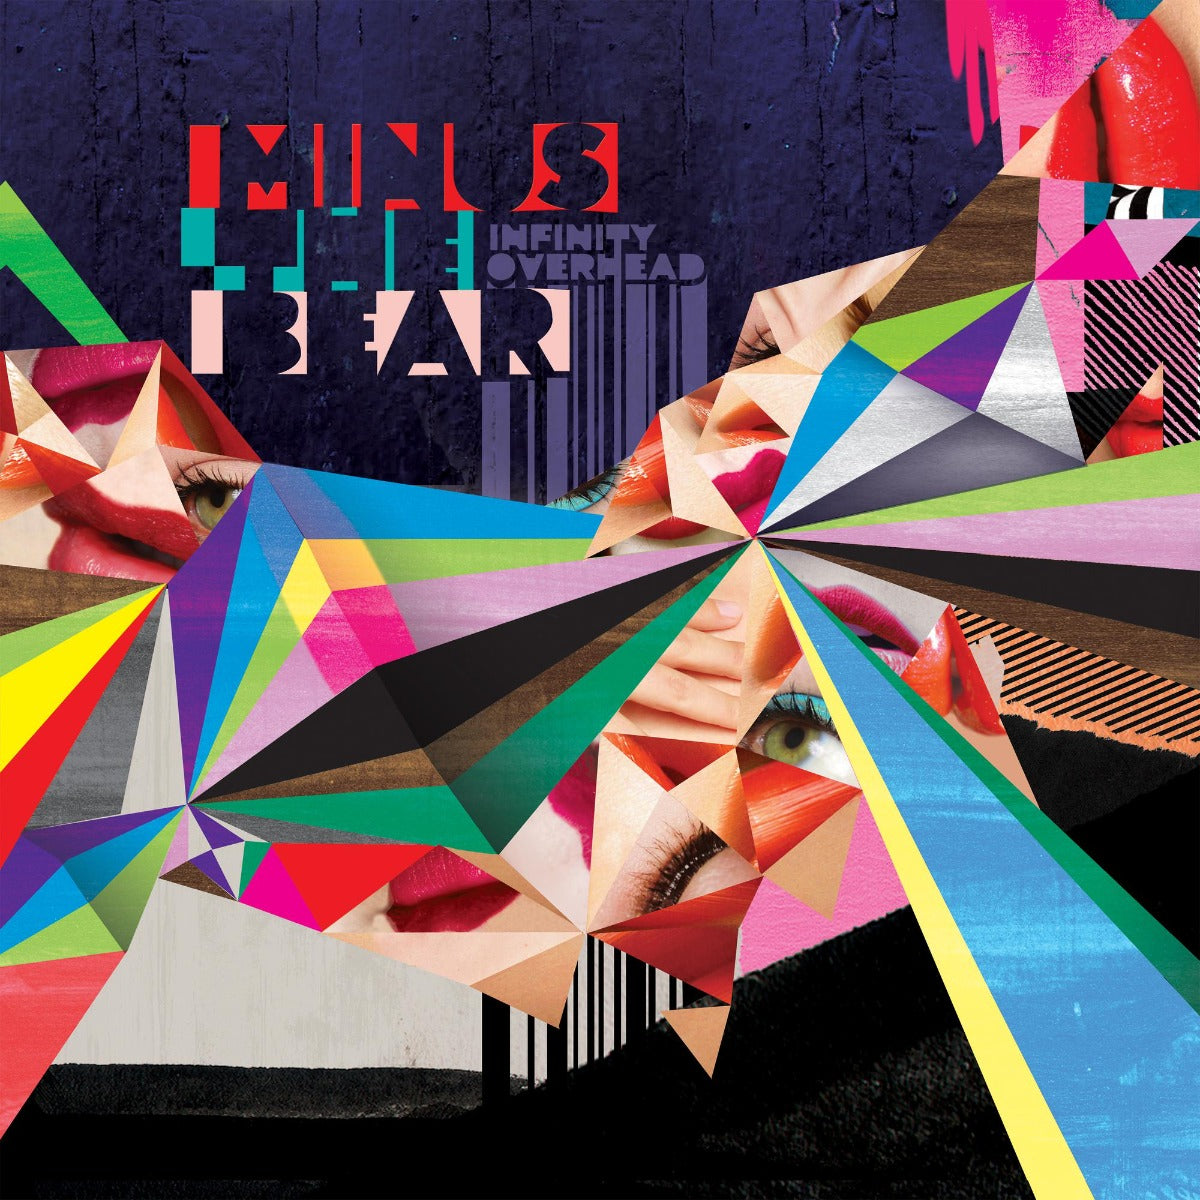 Infinity Overhead (Colored Vinyl, Neon Pink, Indie Exclusive)